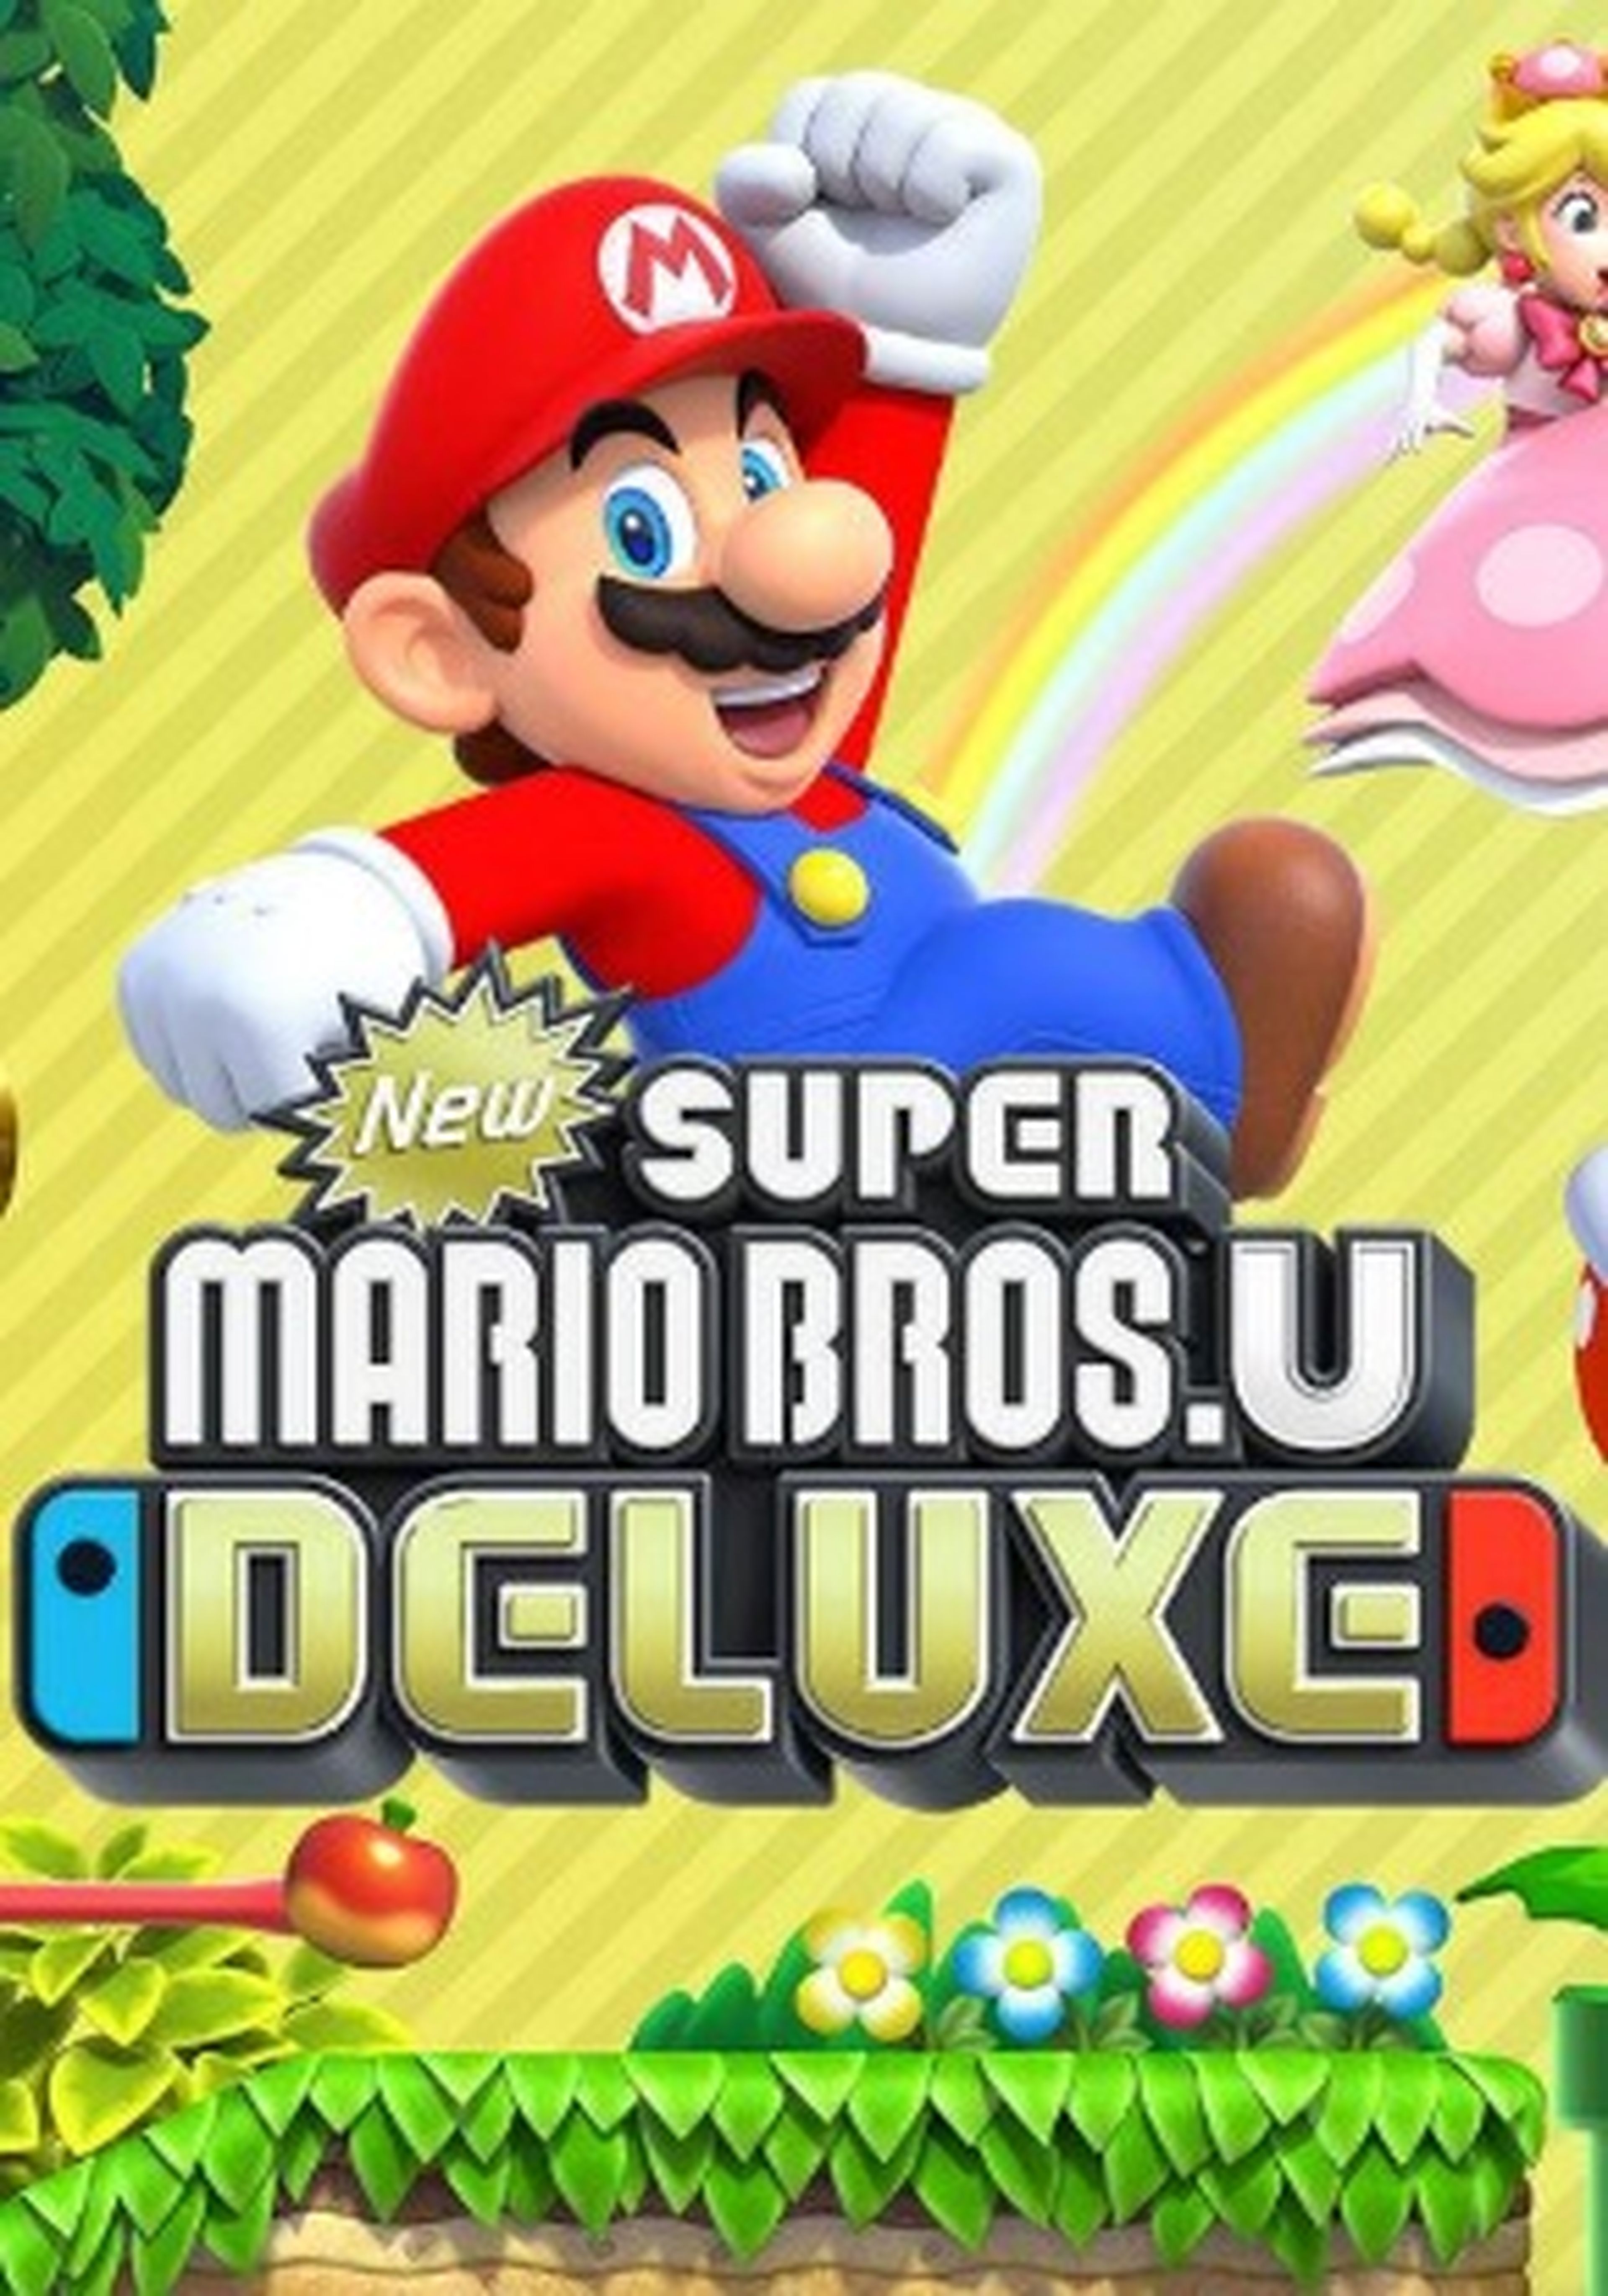 Newer mario bros download. Игра New super Mario Bros. U Deluxe. Супер Марио БРОС U Делюкс. Super Mario Bros Deluxe Nintendo Switch. New super Mario Bros u Deluxe Nintendo Switch.